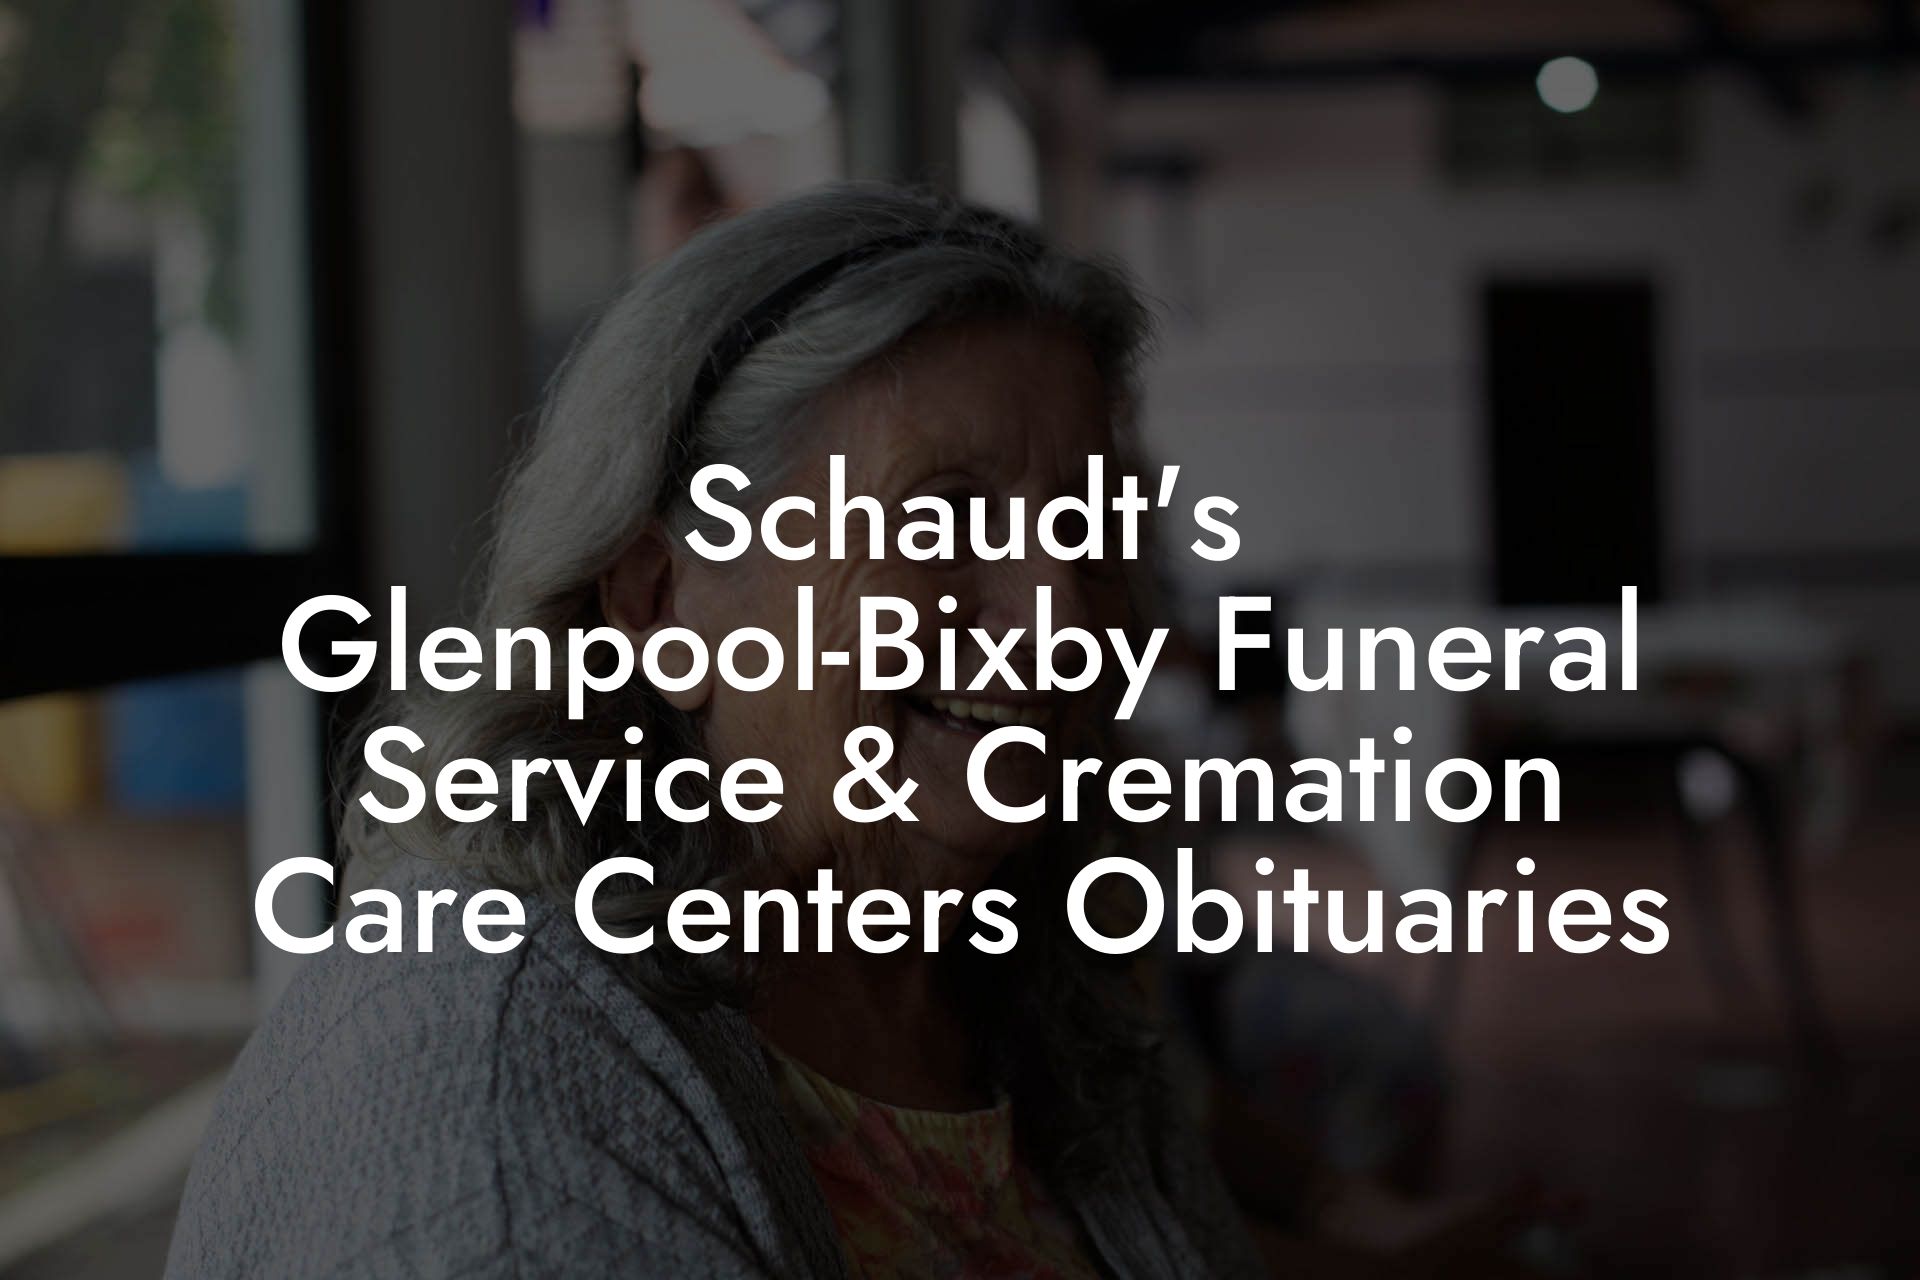 Schaudt's Glenpool-Bixby Funeral Service & Cremation Care Centers Obituaries